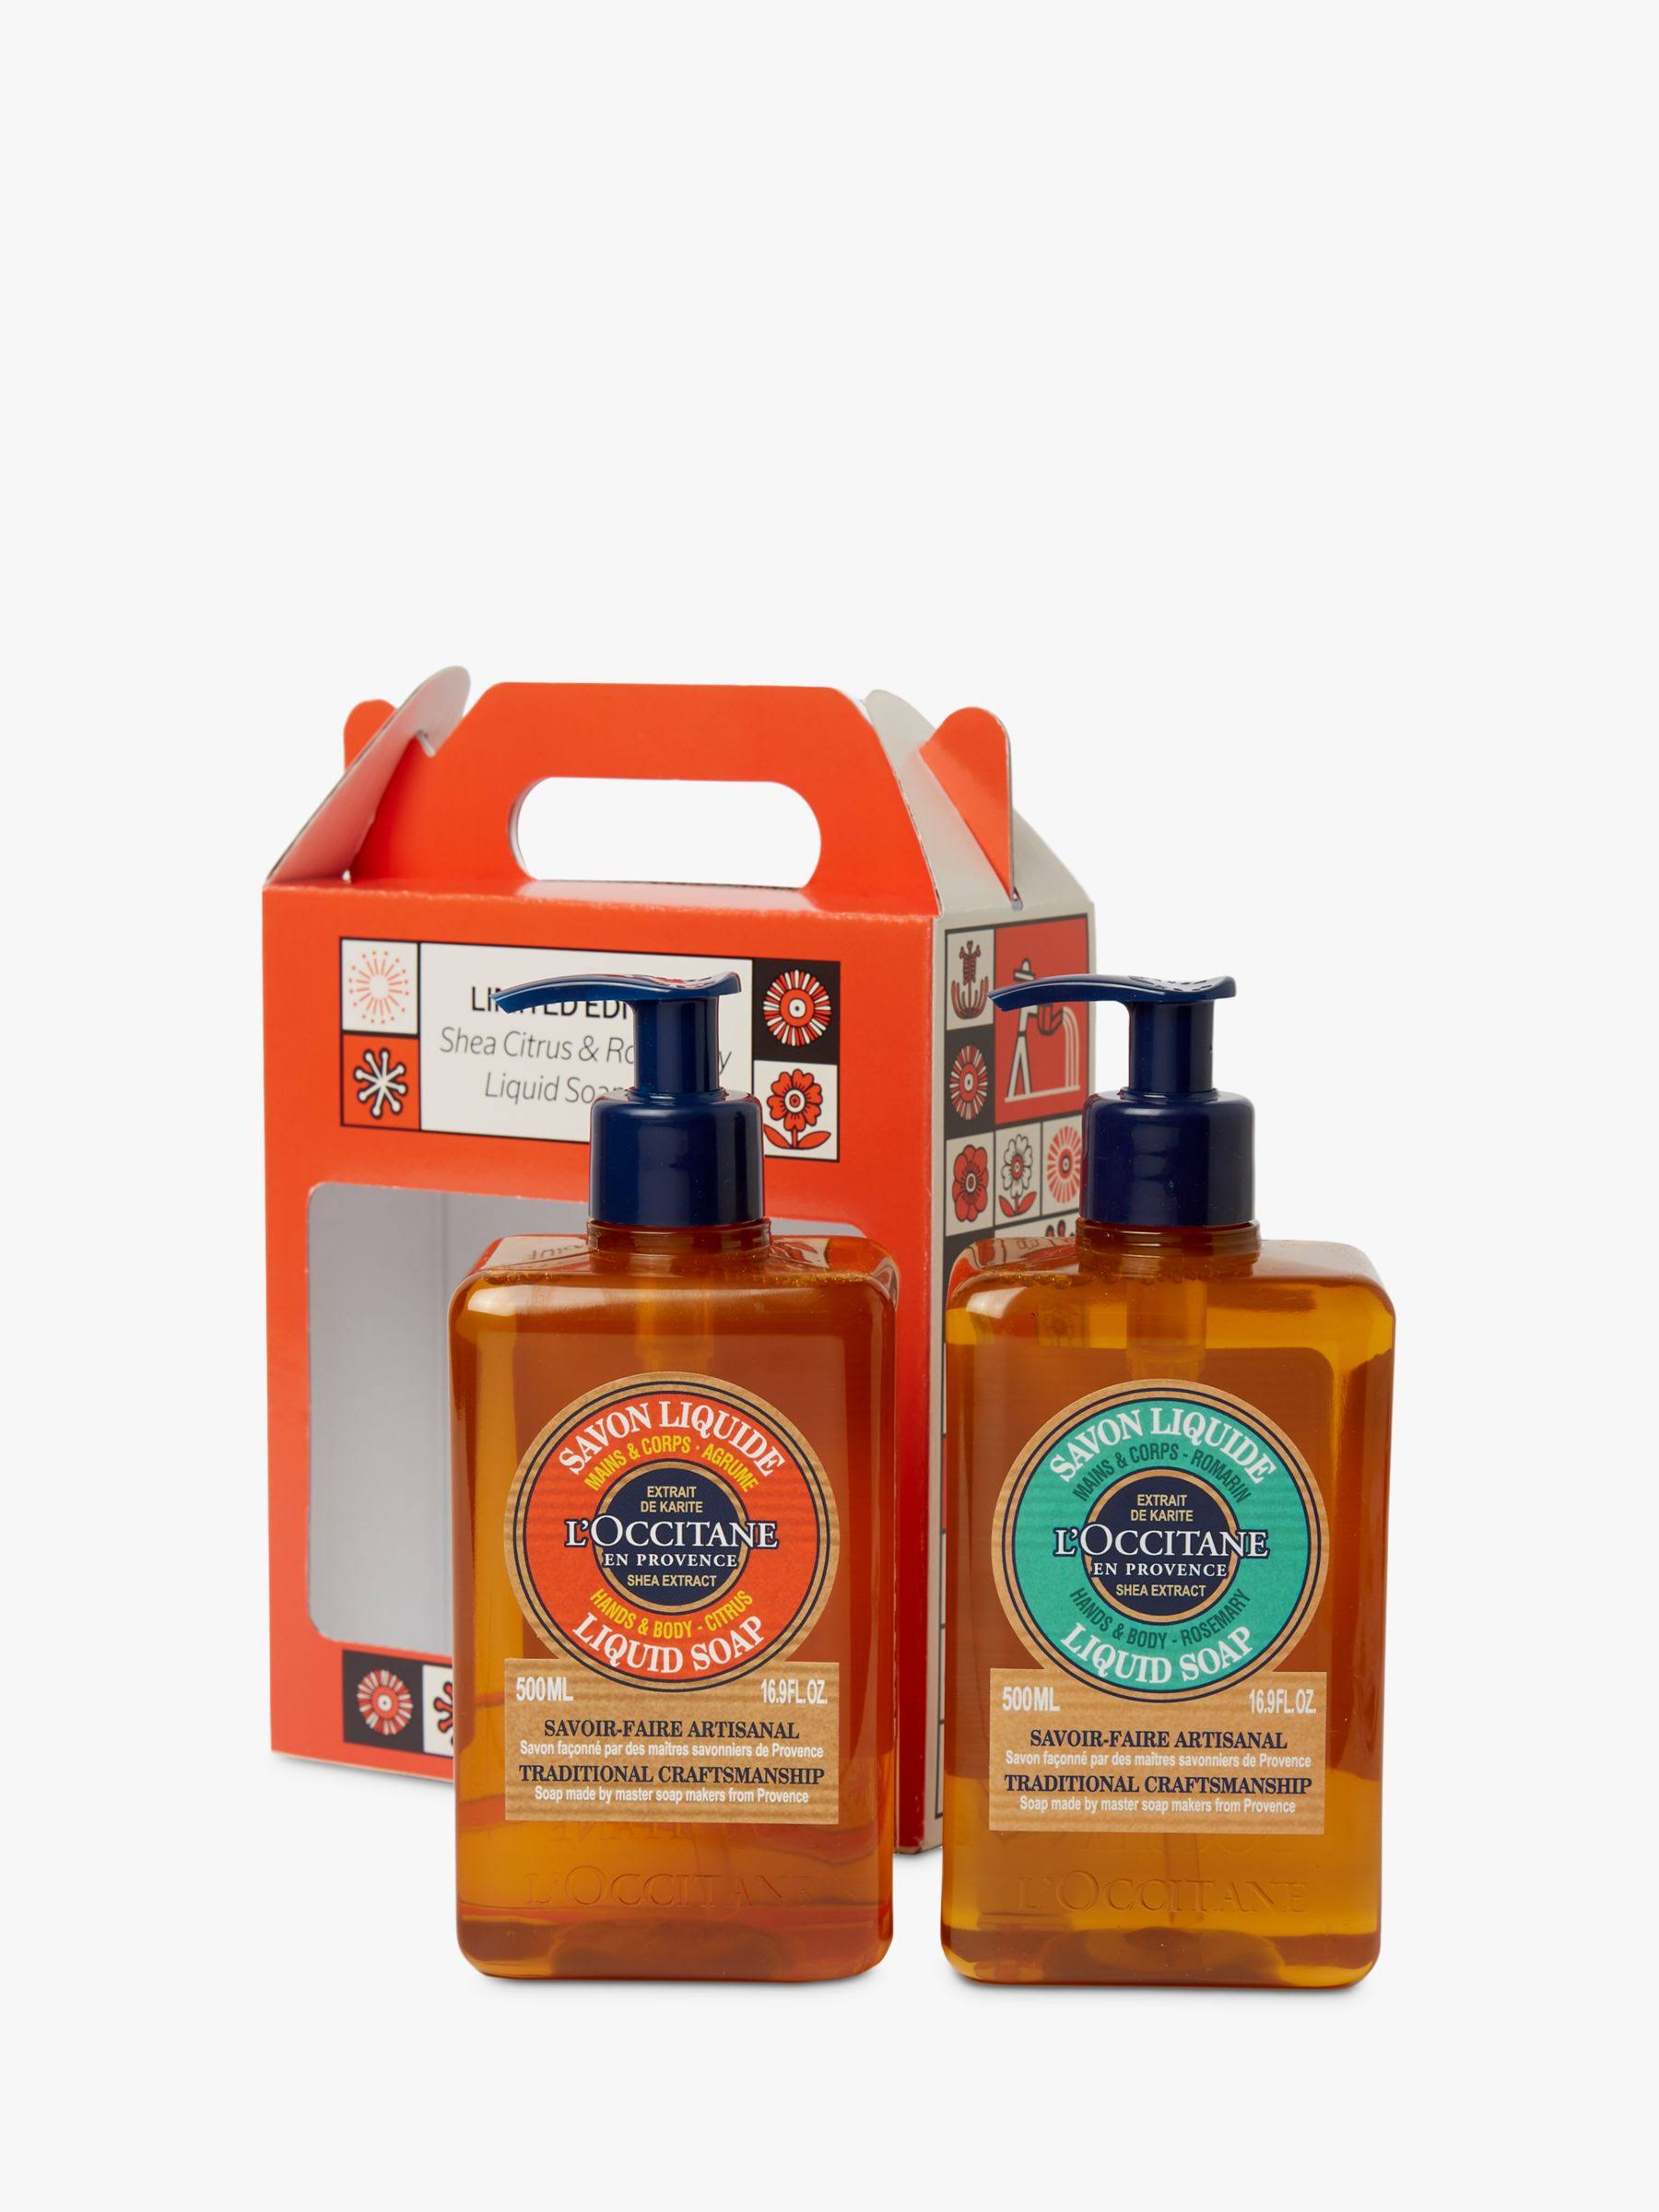 L'Occitane - Shea Citrus & Rosemary Limited Edition Liquid Soap Duo